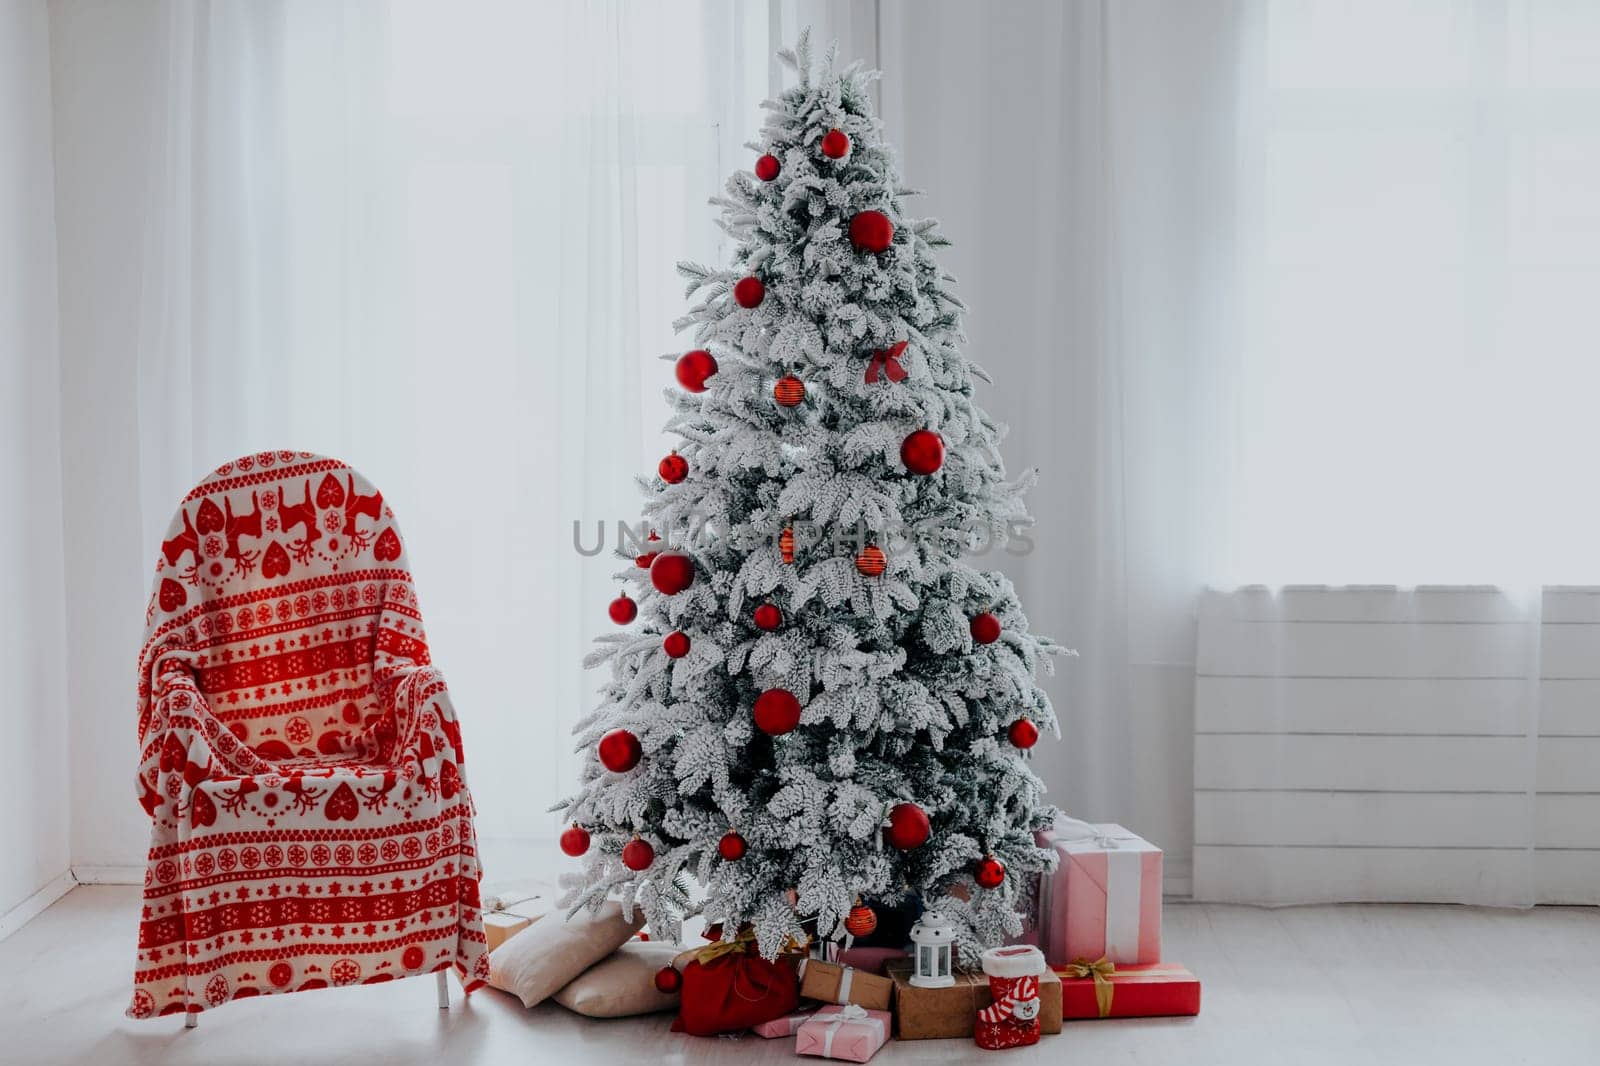 Christmas Interior apartment Christmas tree new year holidays by Simakov